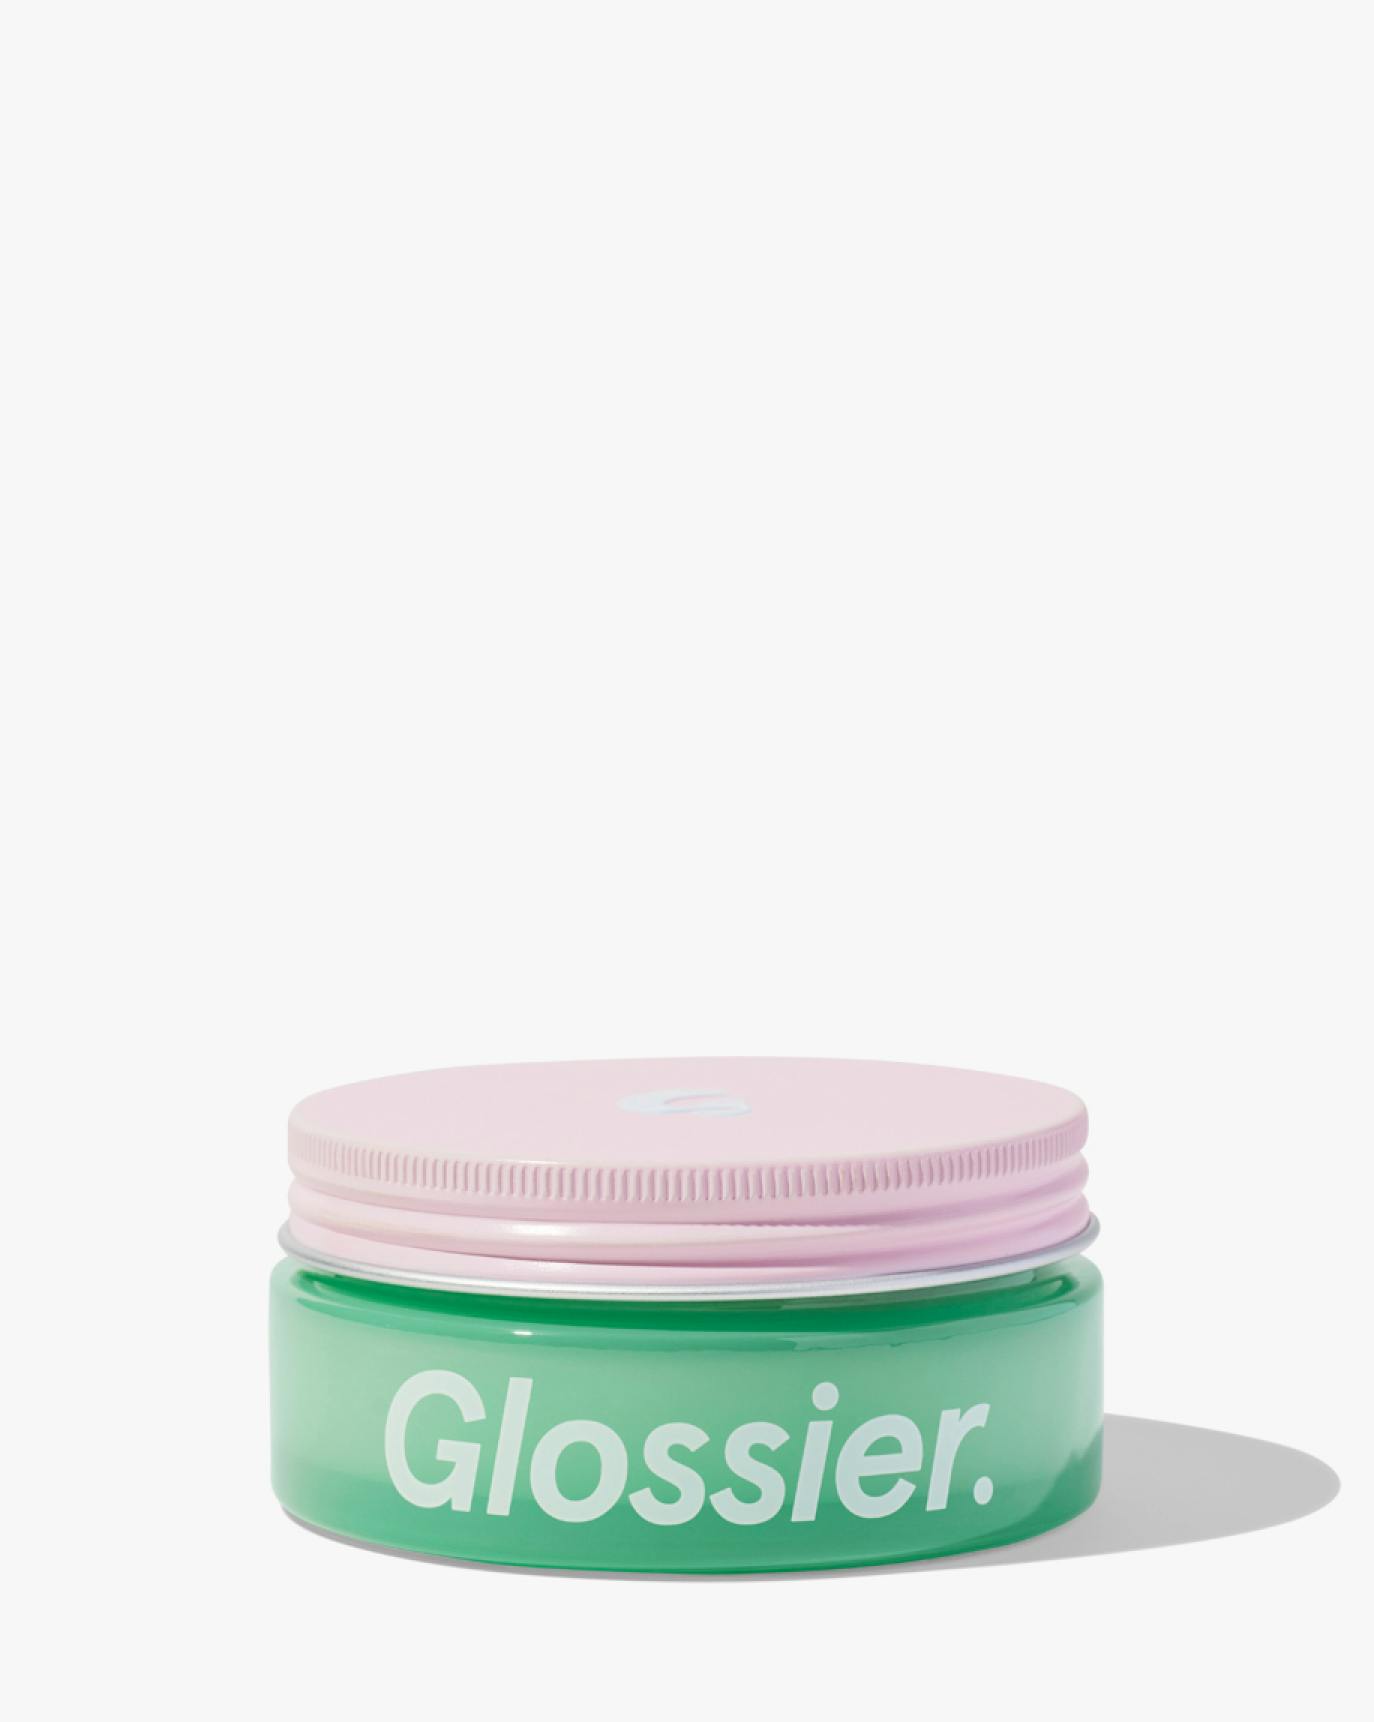 All Skincare – Glossier